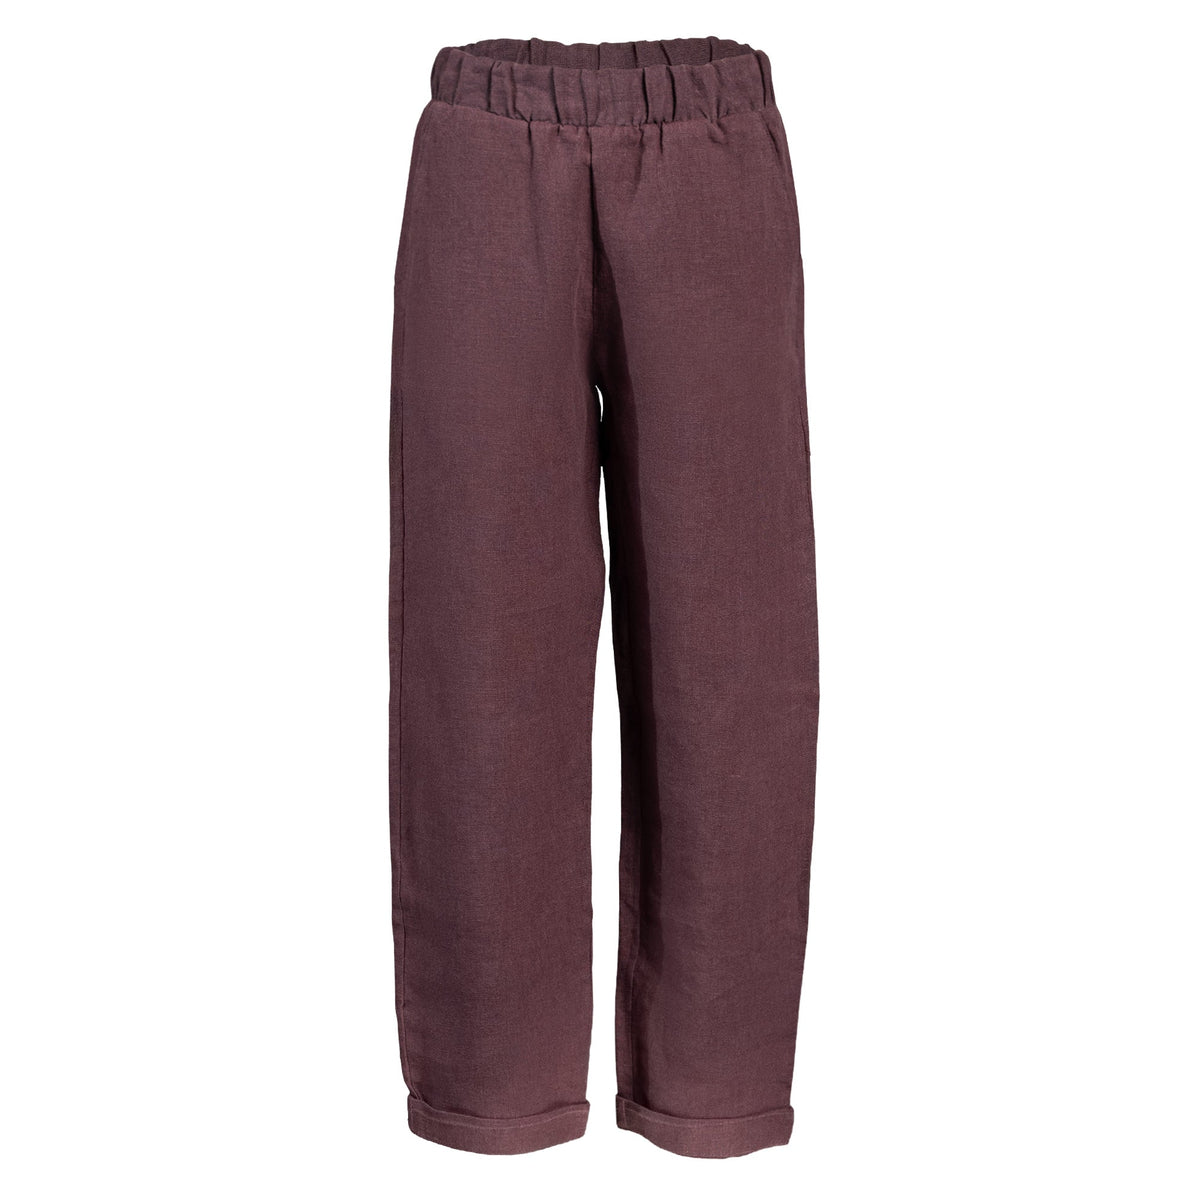 MENIQUE 100% Linen Pants Dakota